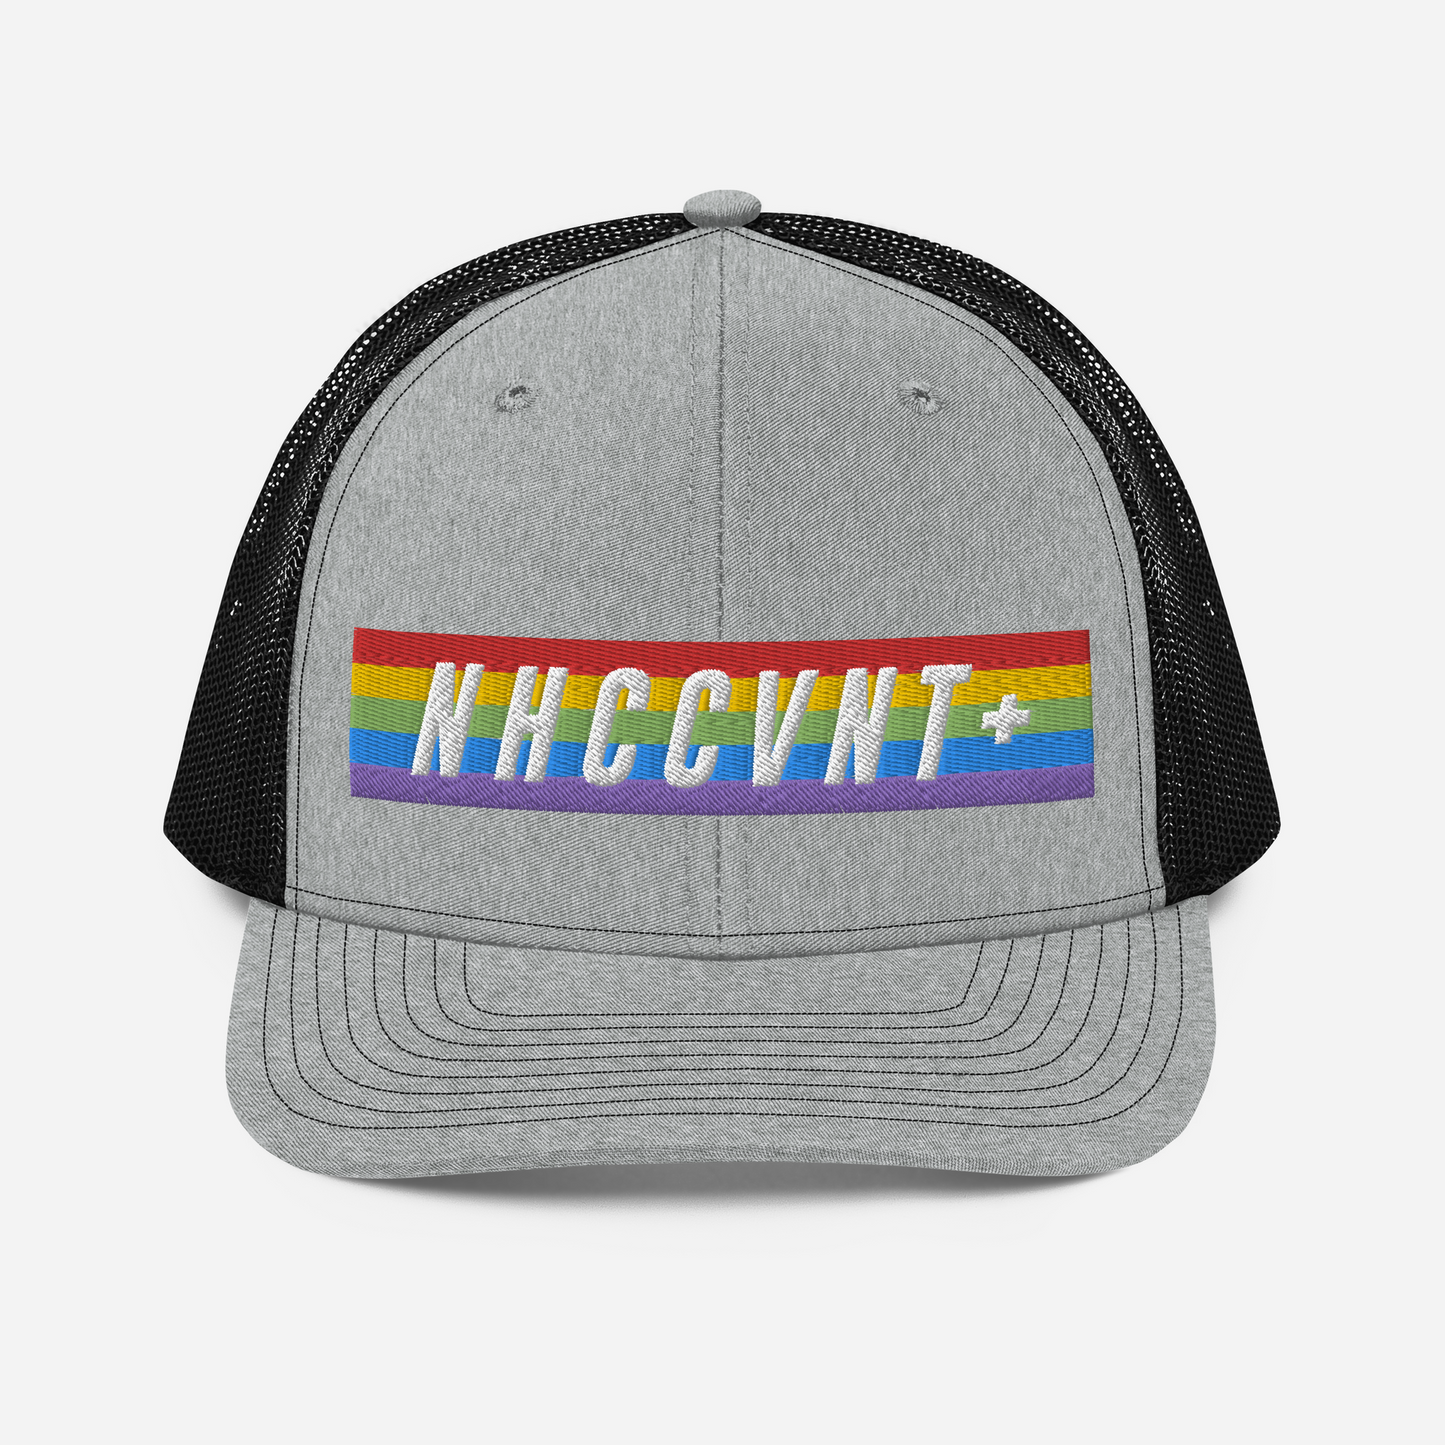 NHCCVNT+ Richardson Trucker Hat